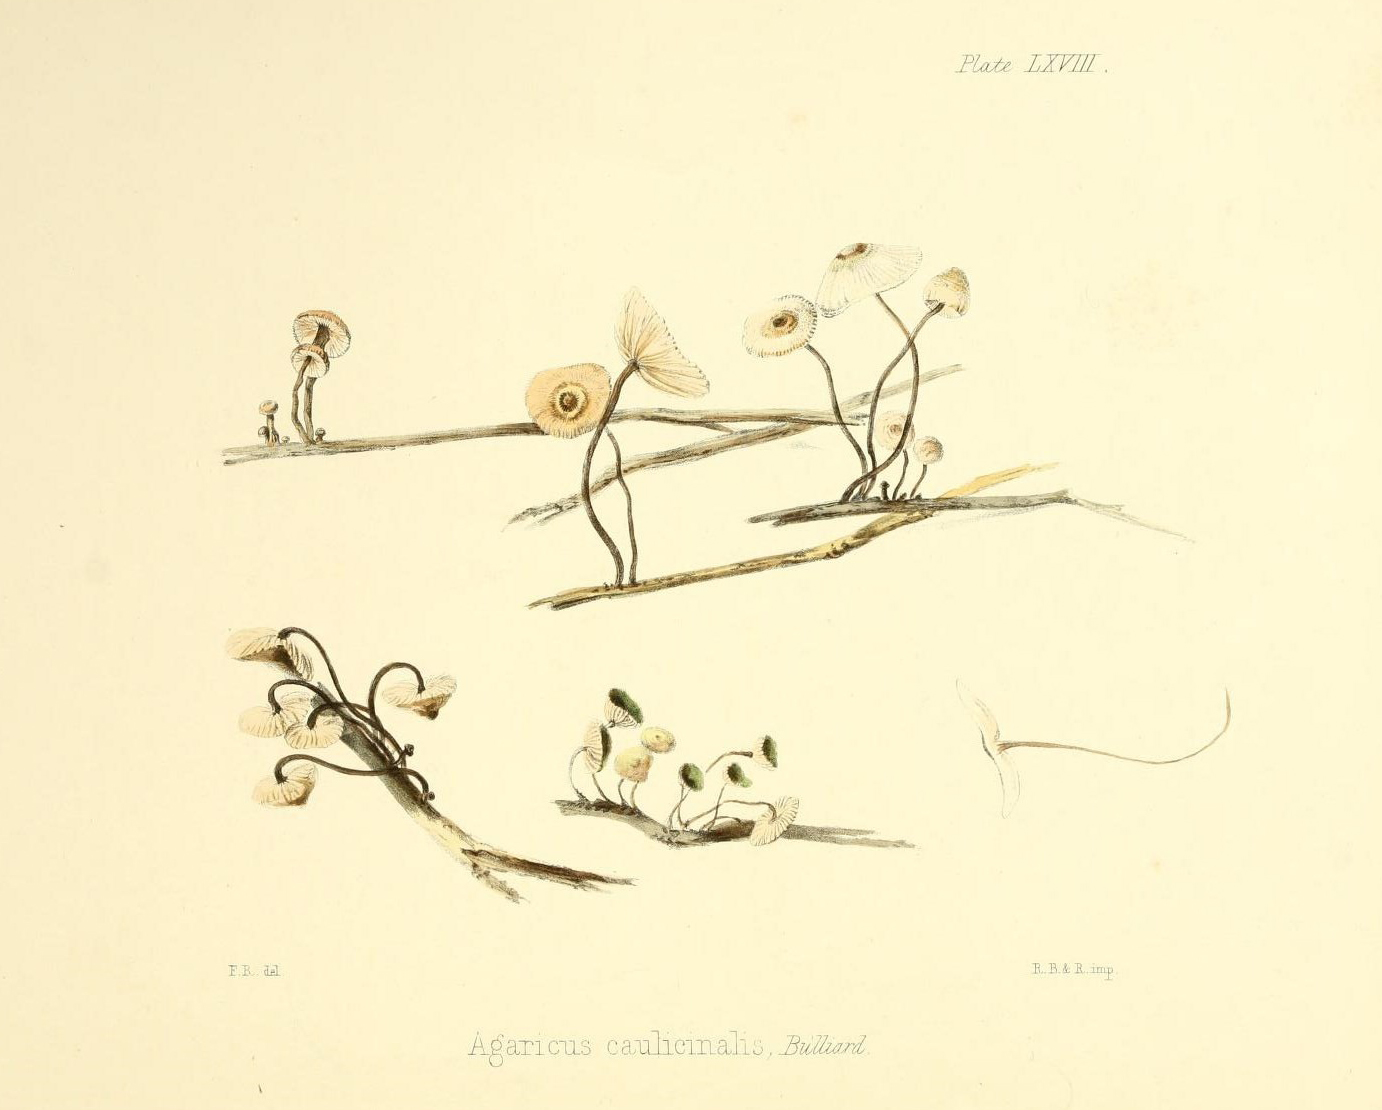 Illustration of fungi.